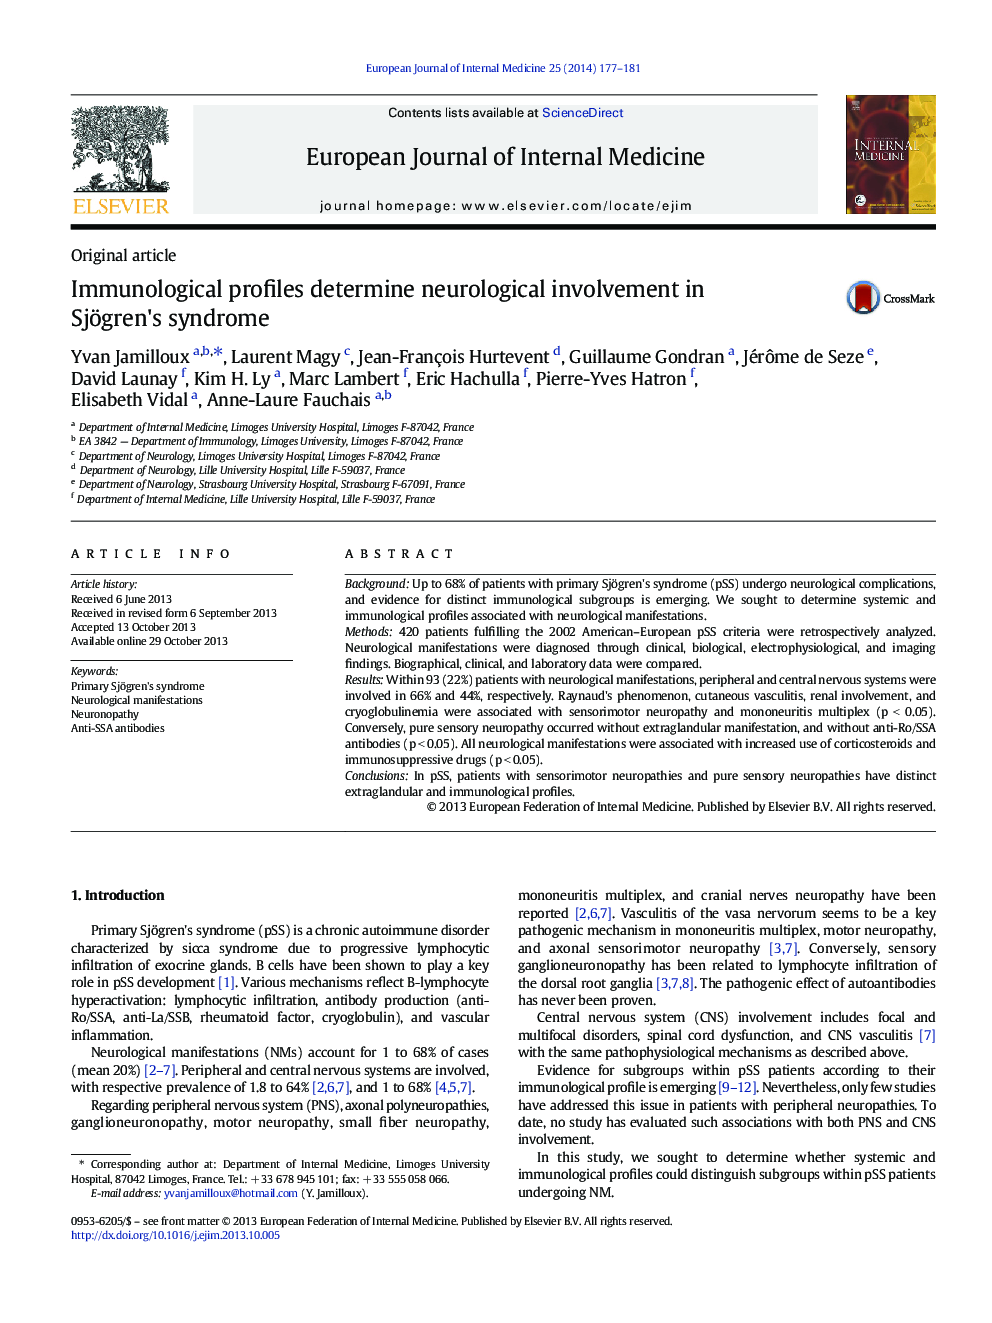 Immunological profiles determine neurological involvement in Sjögren's syndrome